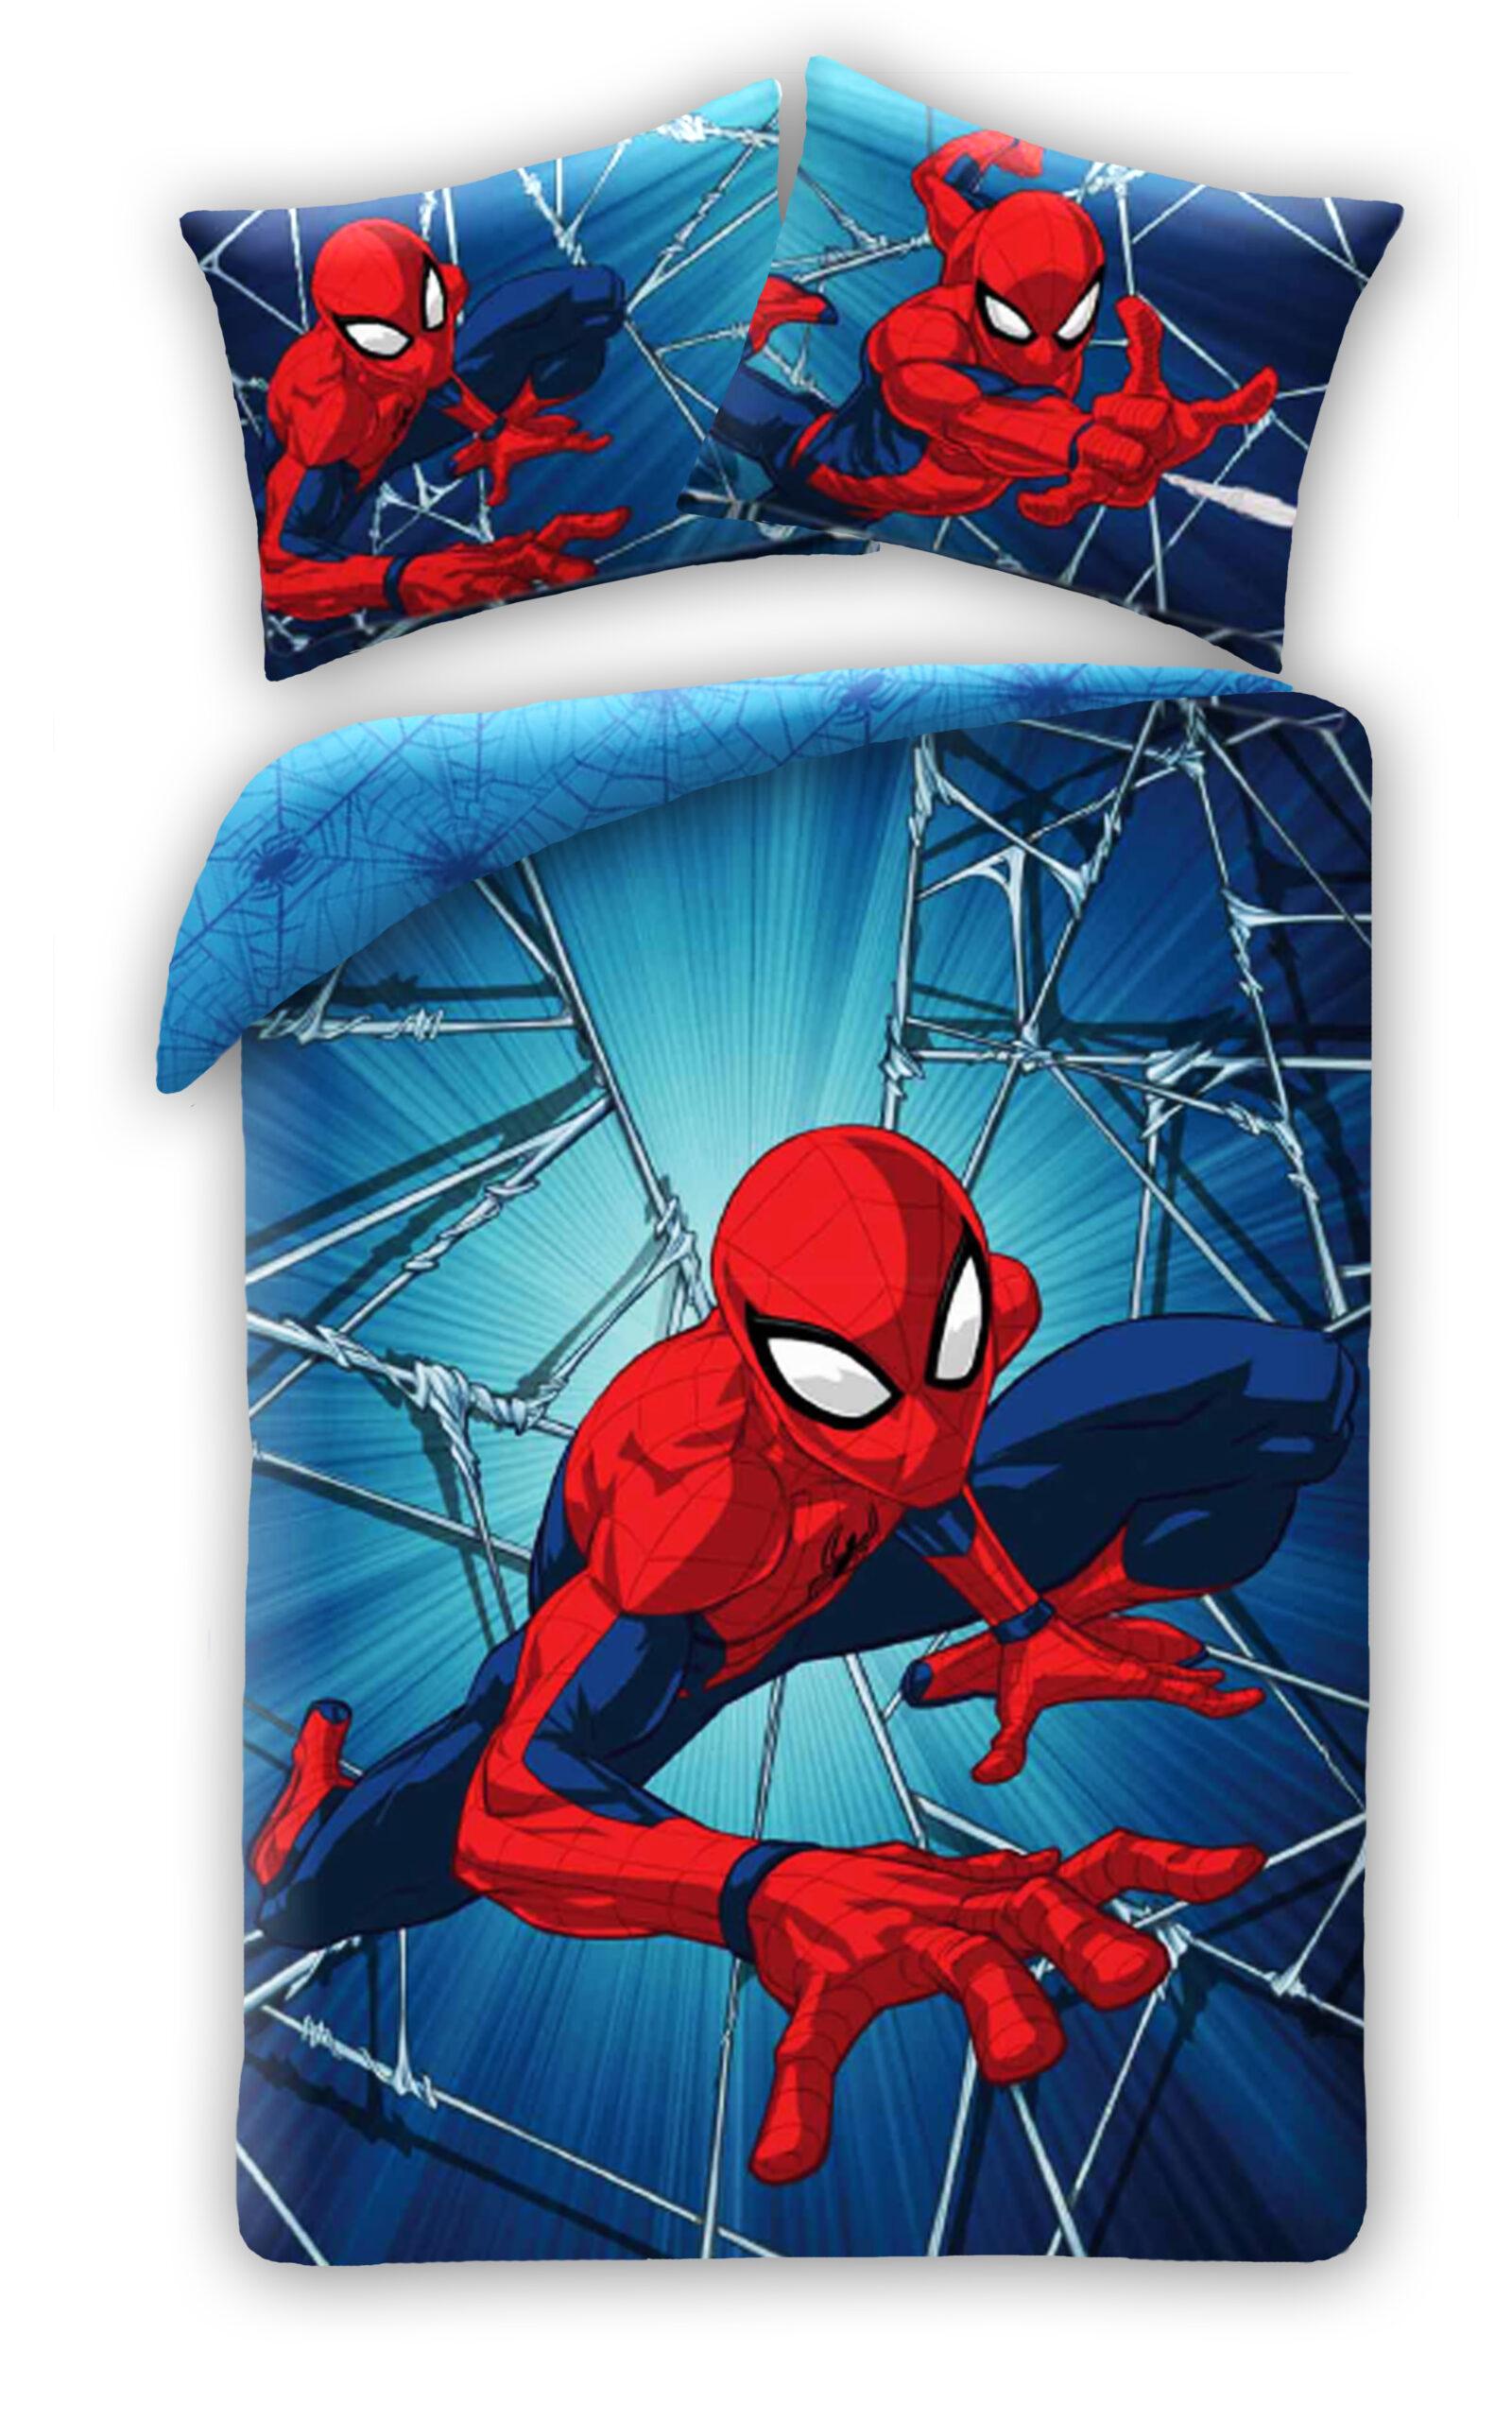 SpiderMan Dekbedovertrek web 140 x 200 cm - 70 x 90 cm (katoen) pre order